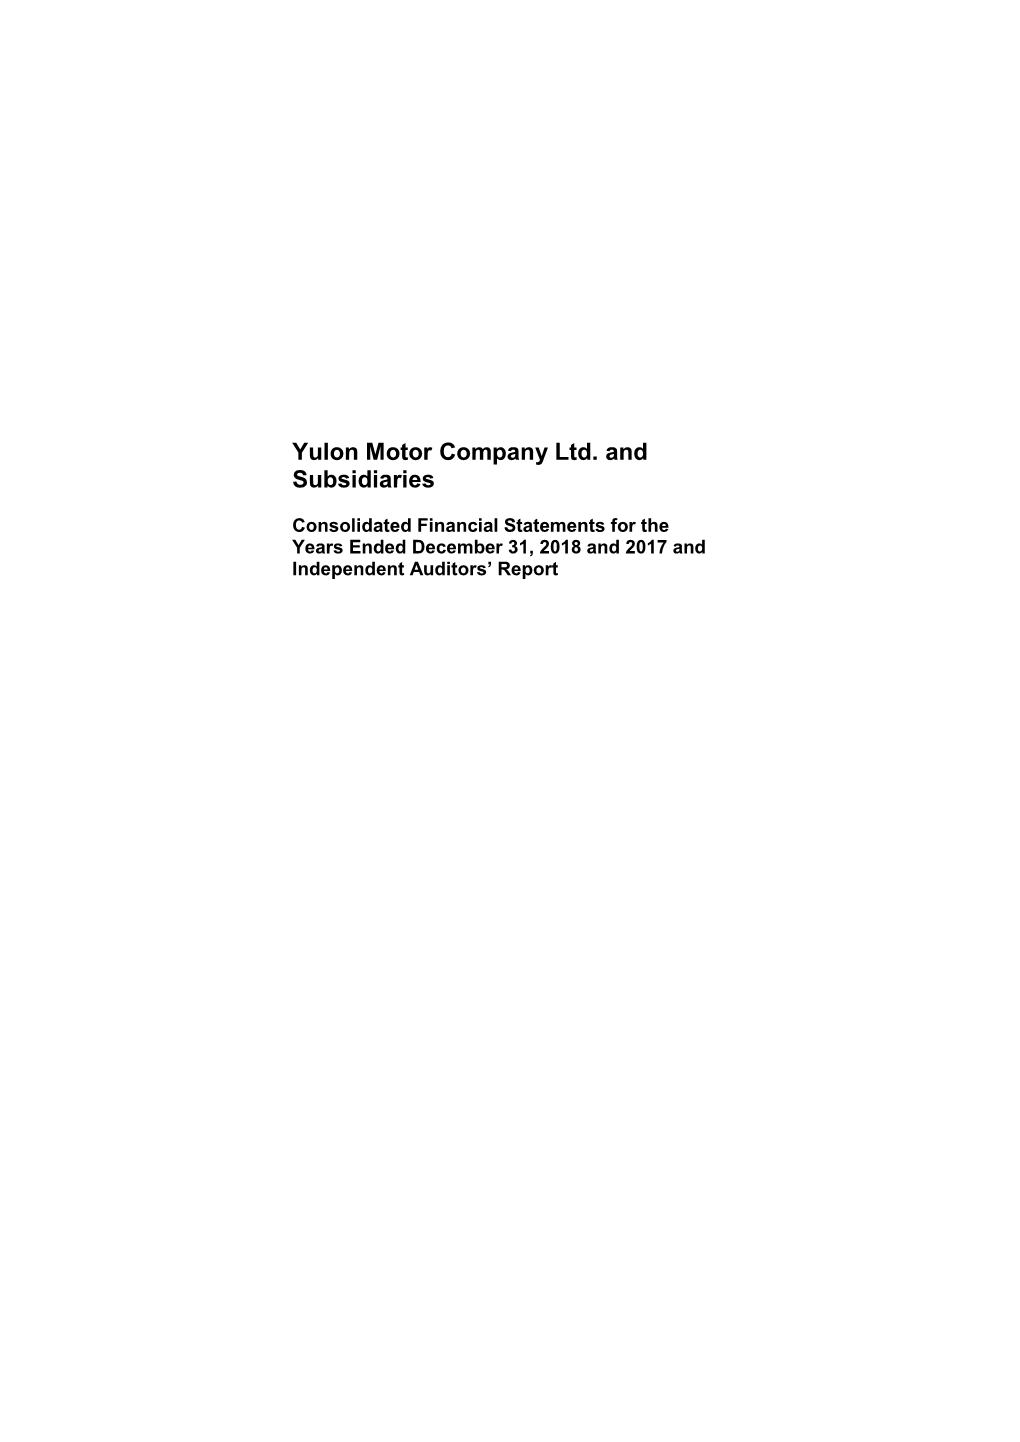 Yulon Motor Company Ltd. and Subsidiaries